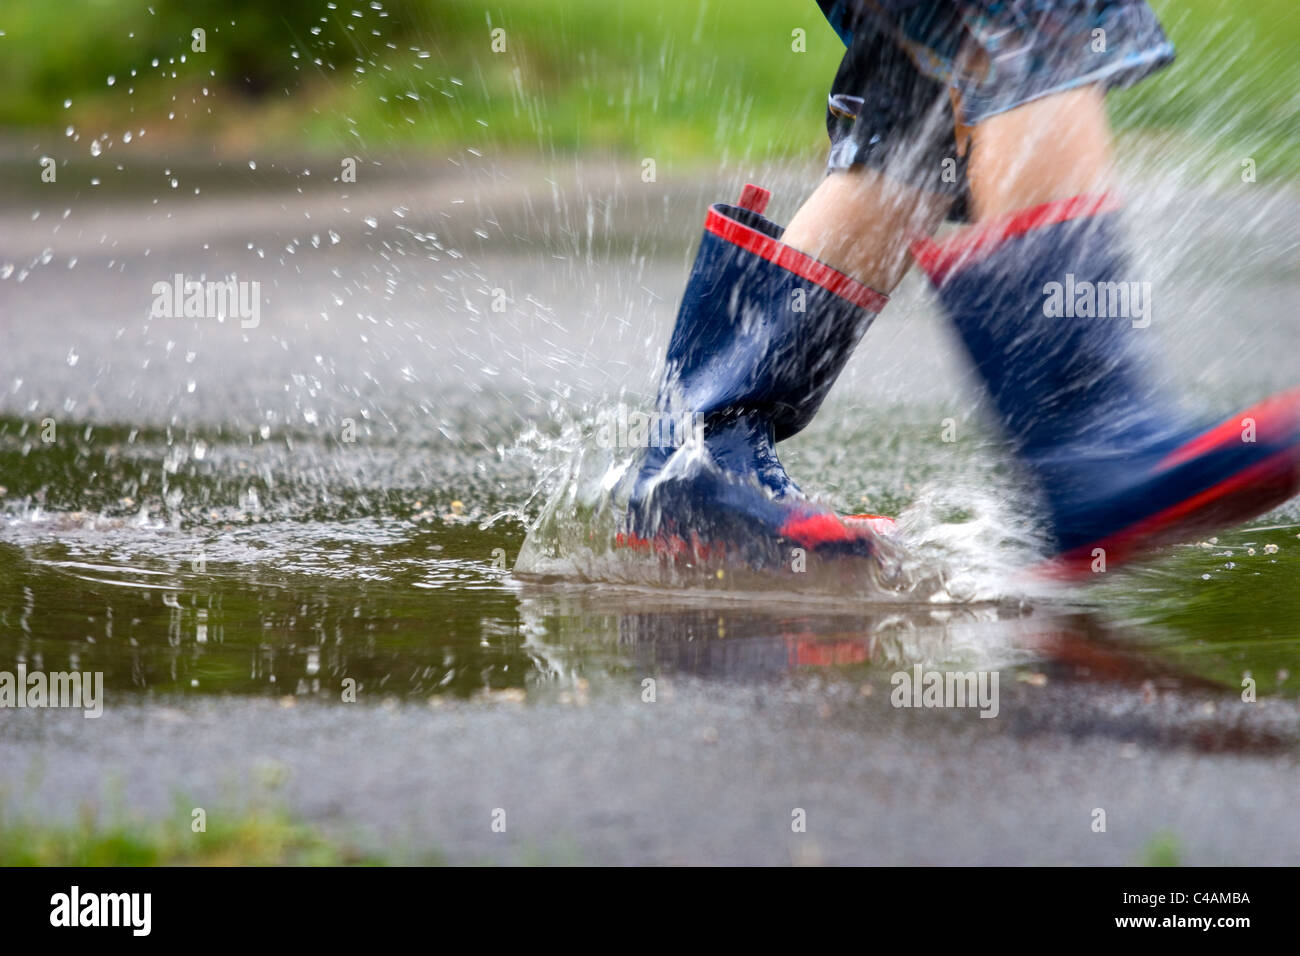 Kids rain boots splashing in a puddle Stock Photo